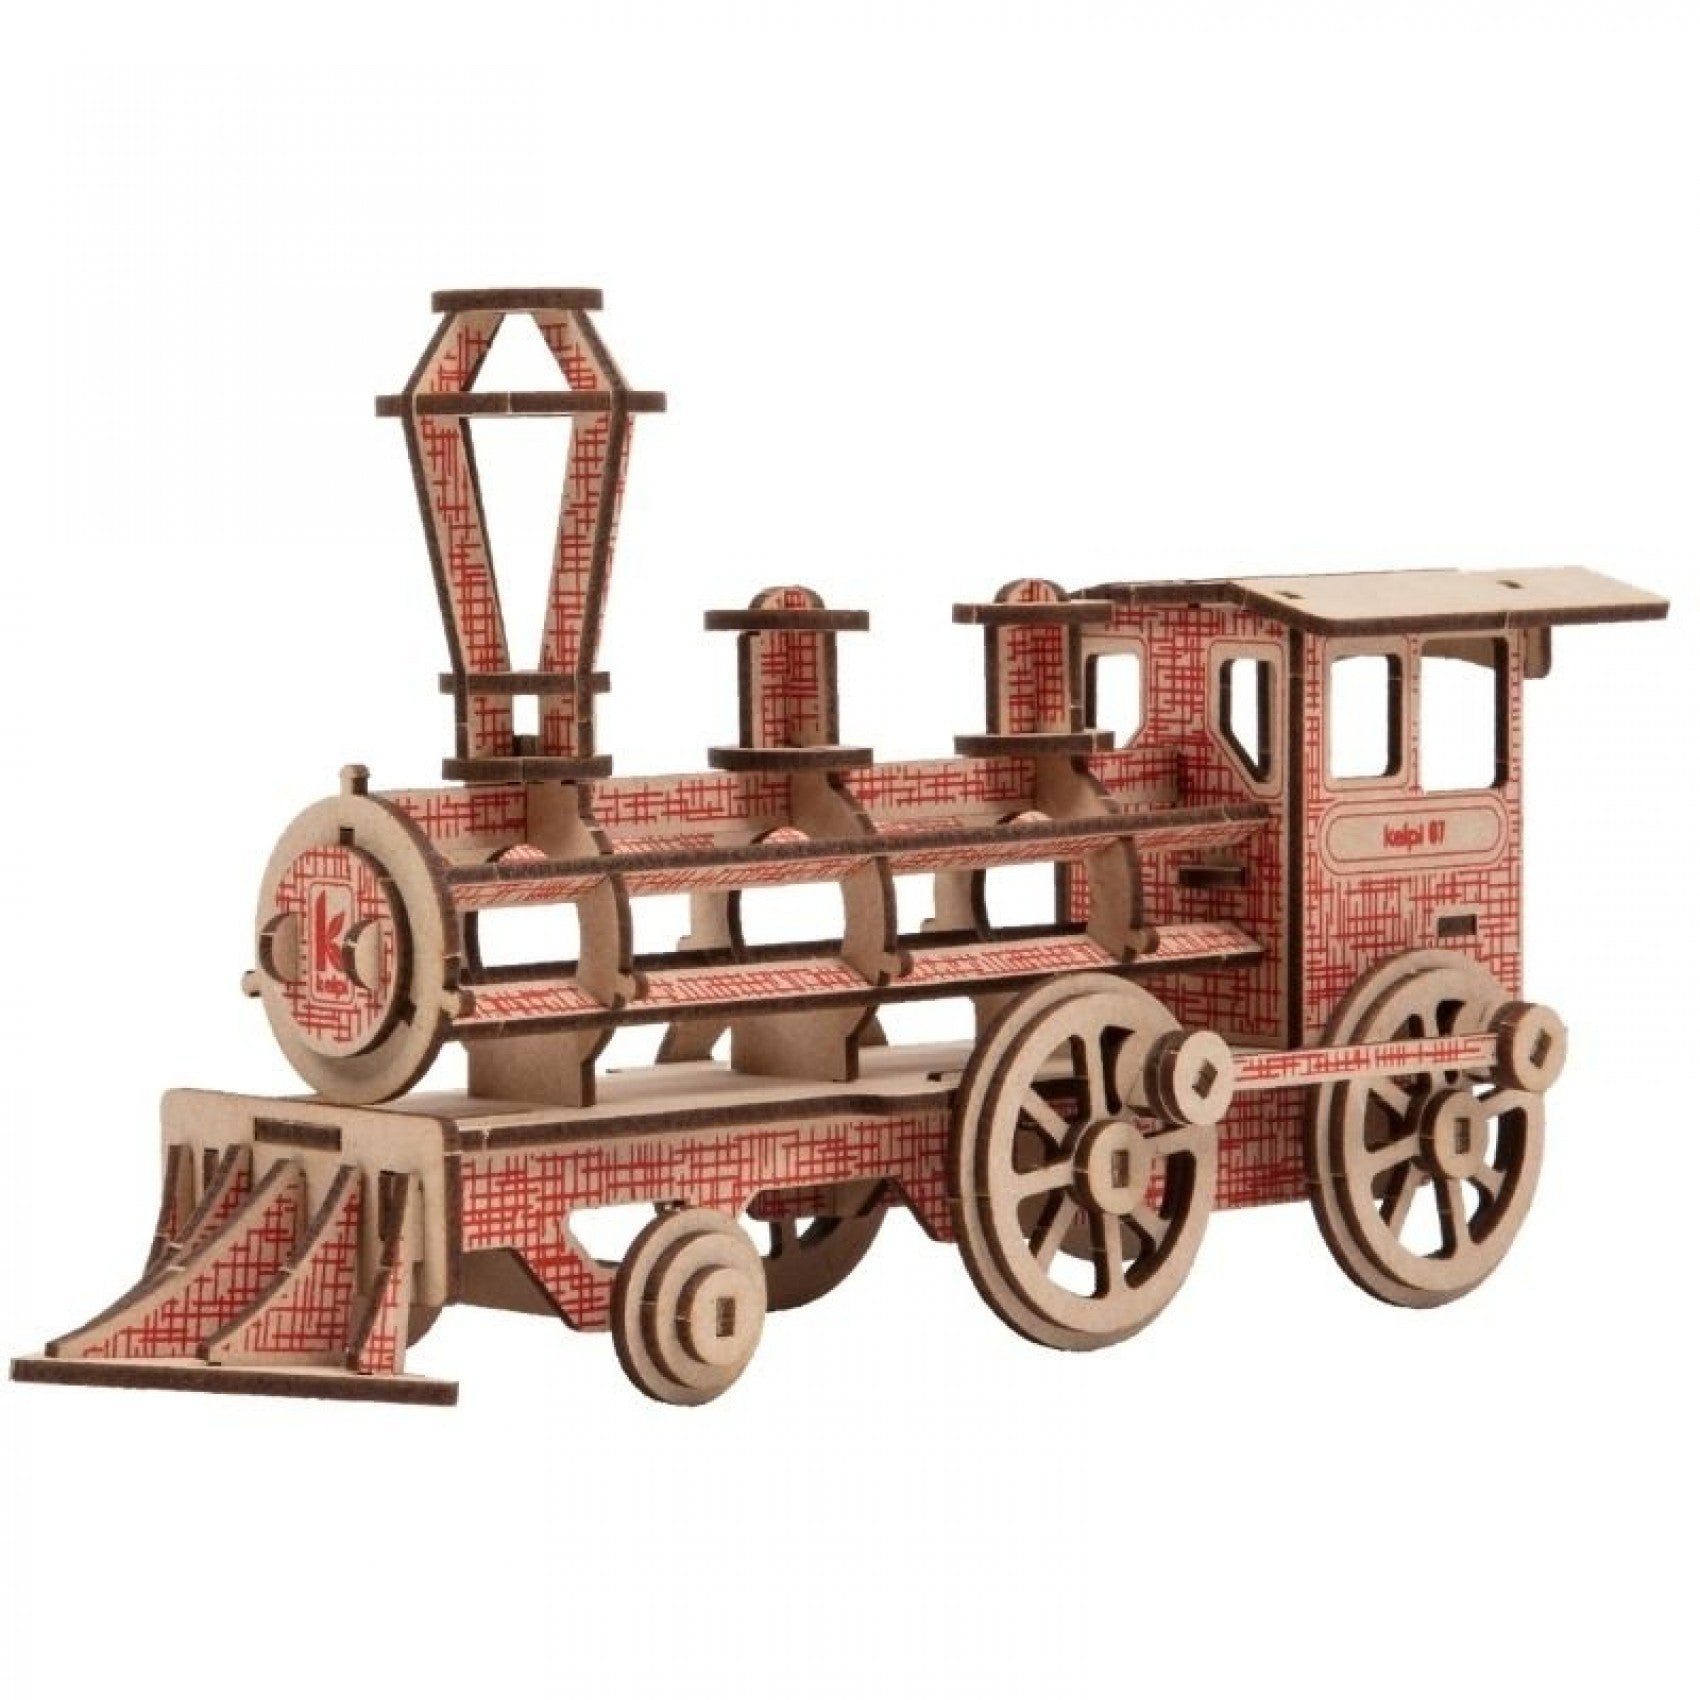 La Locomotive maquette - Kelpi -